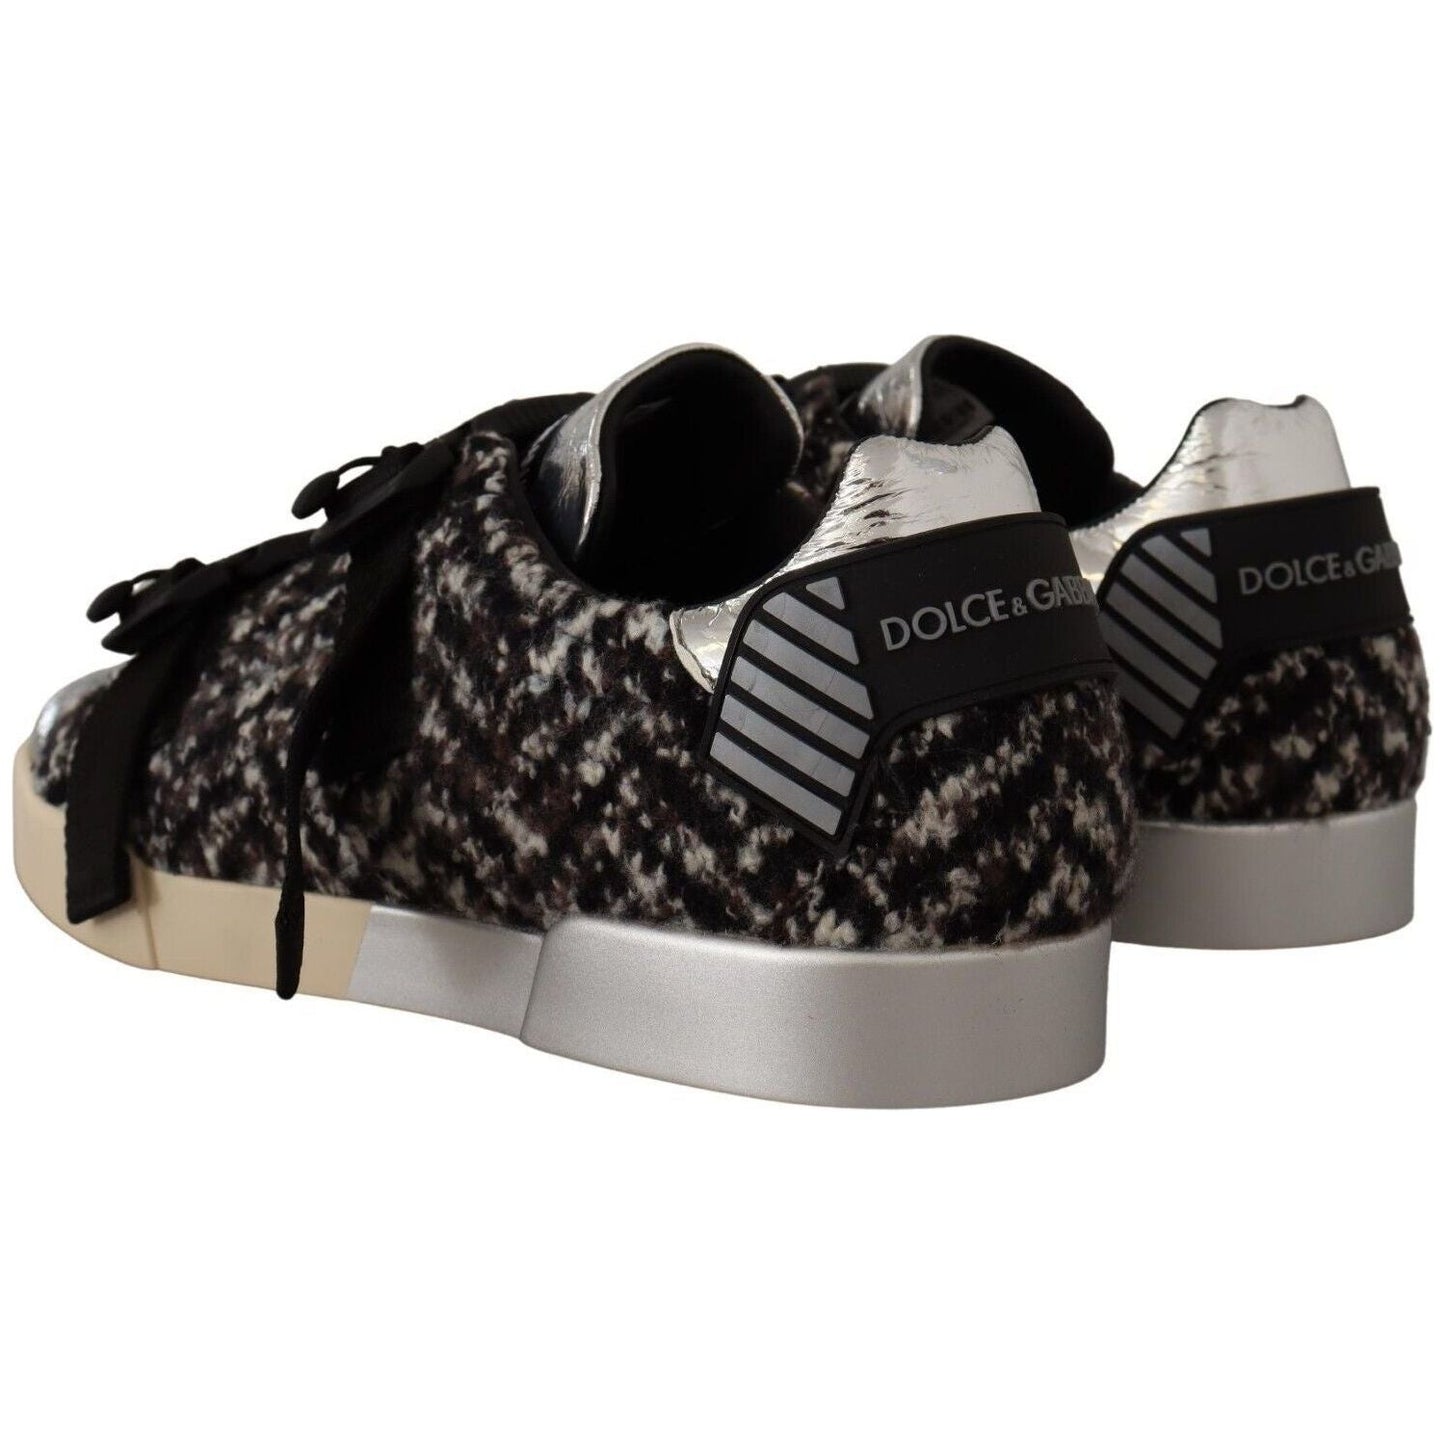 Dolce & Gabbana Silver Elegance Leather Sneakers silver-leather-brown-cotton-wool-sneakers-shoes s-l1600-1-64-e21ee137-033.jpg